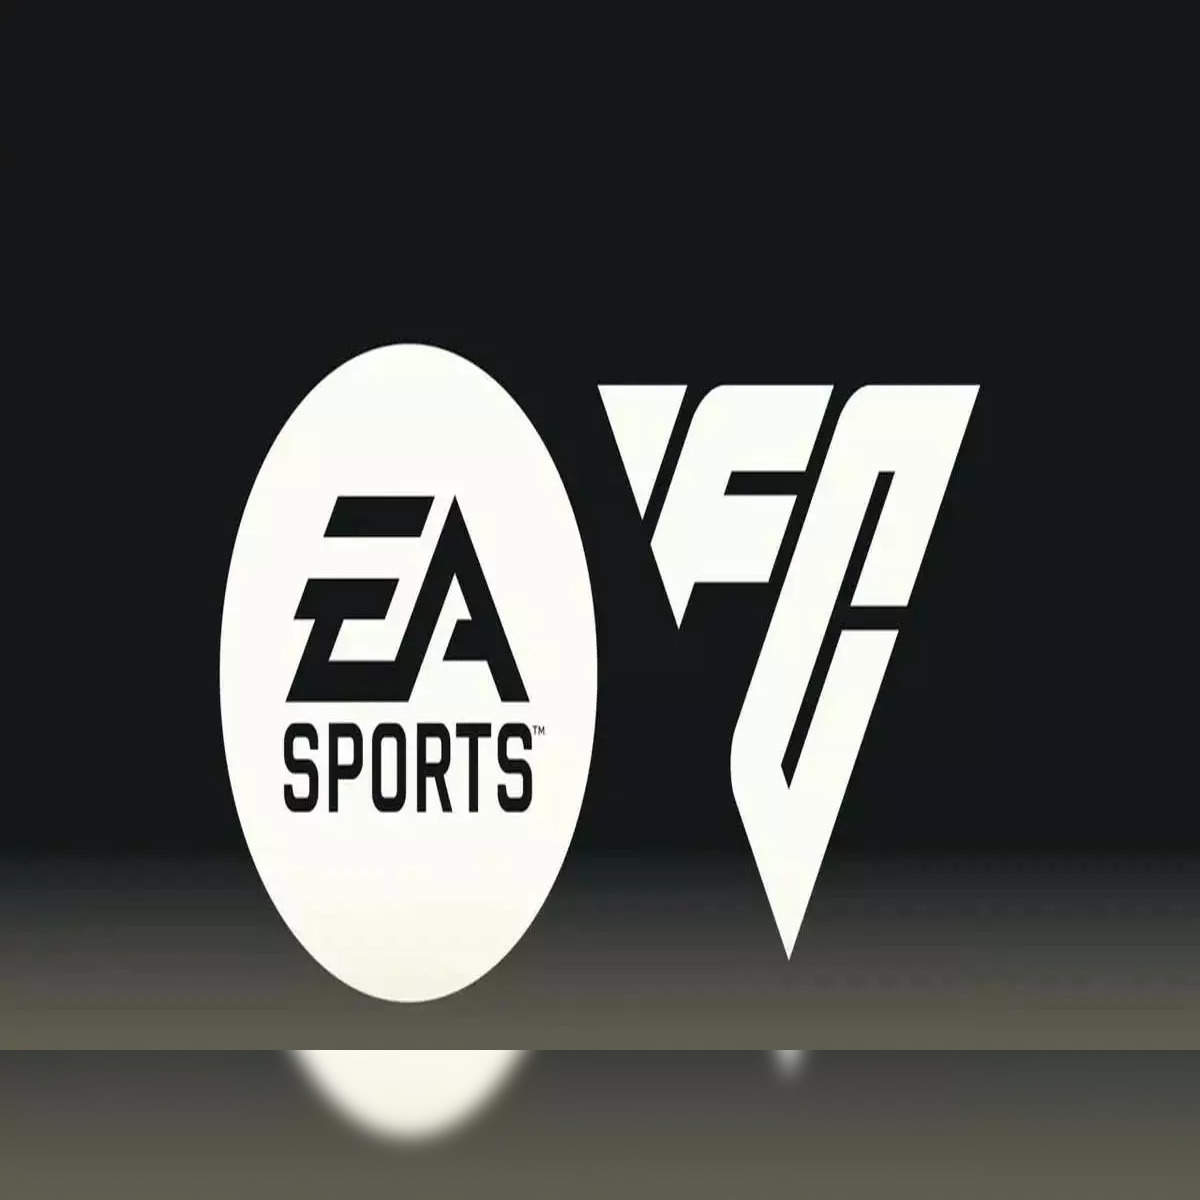 Buy cheap EA SPORTS FC 24 cd key - lowest price